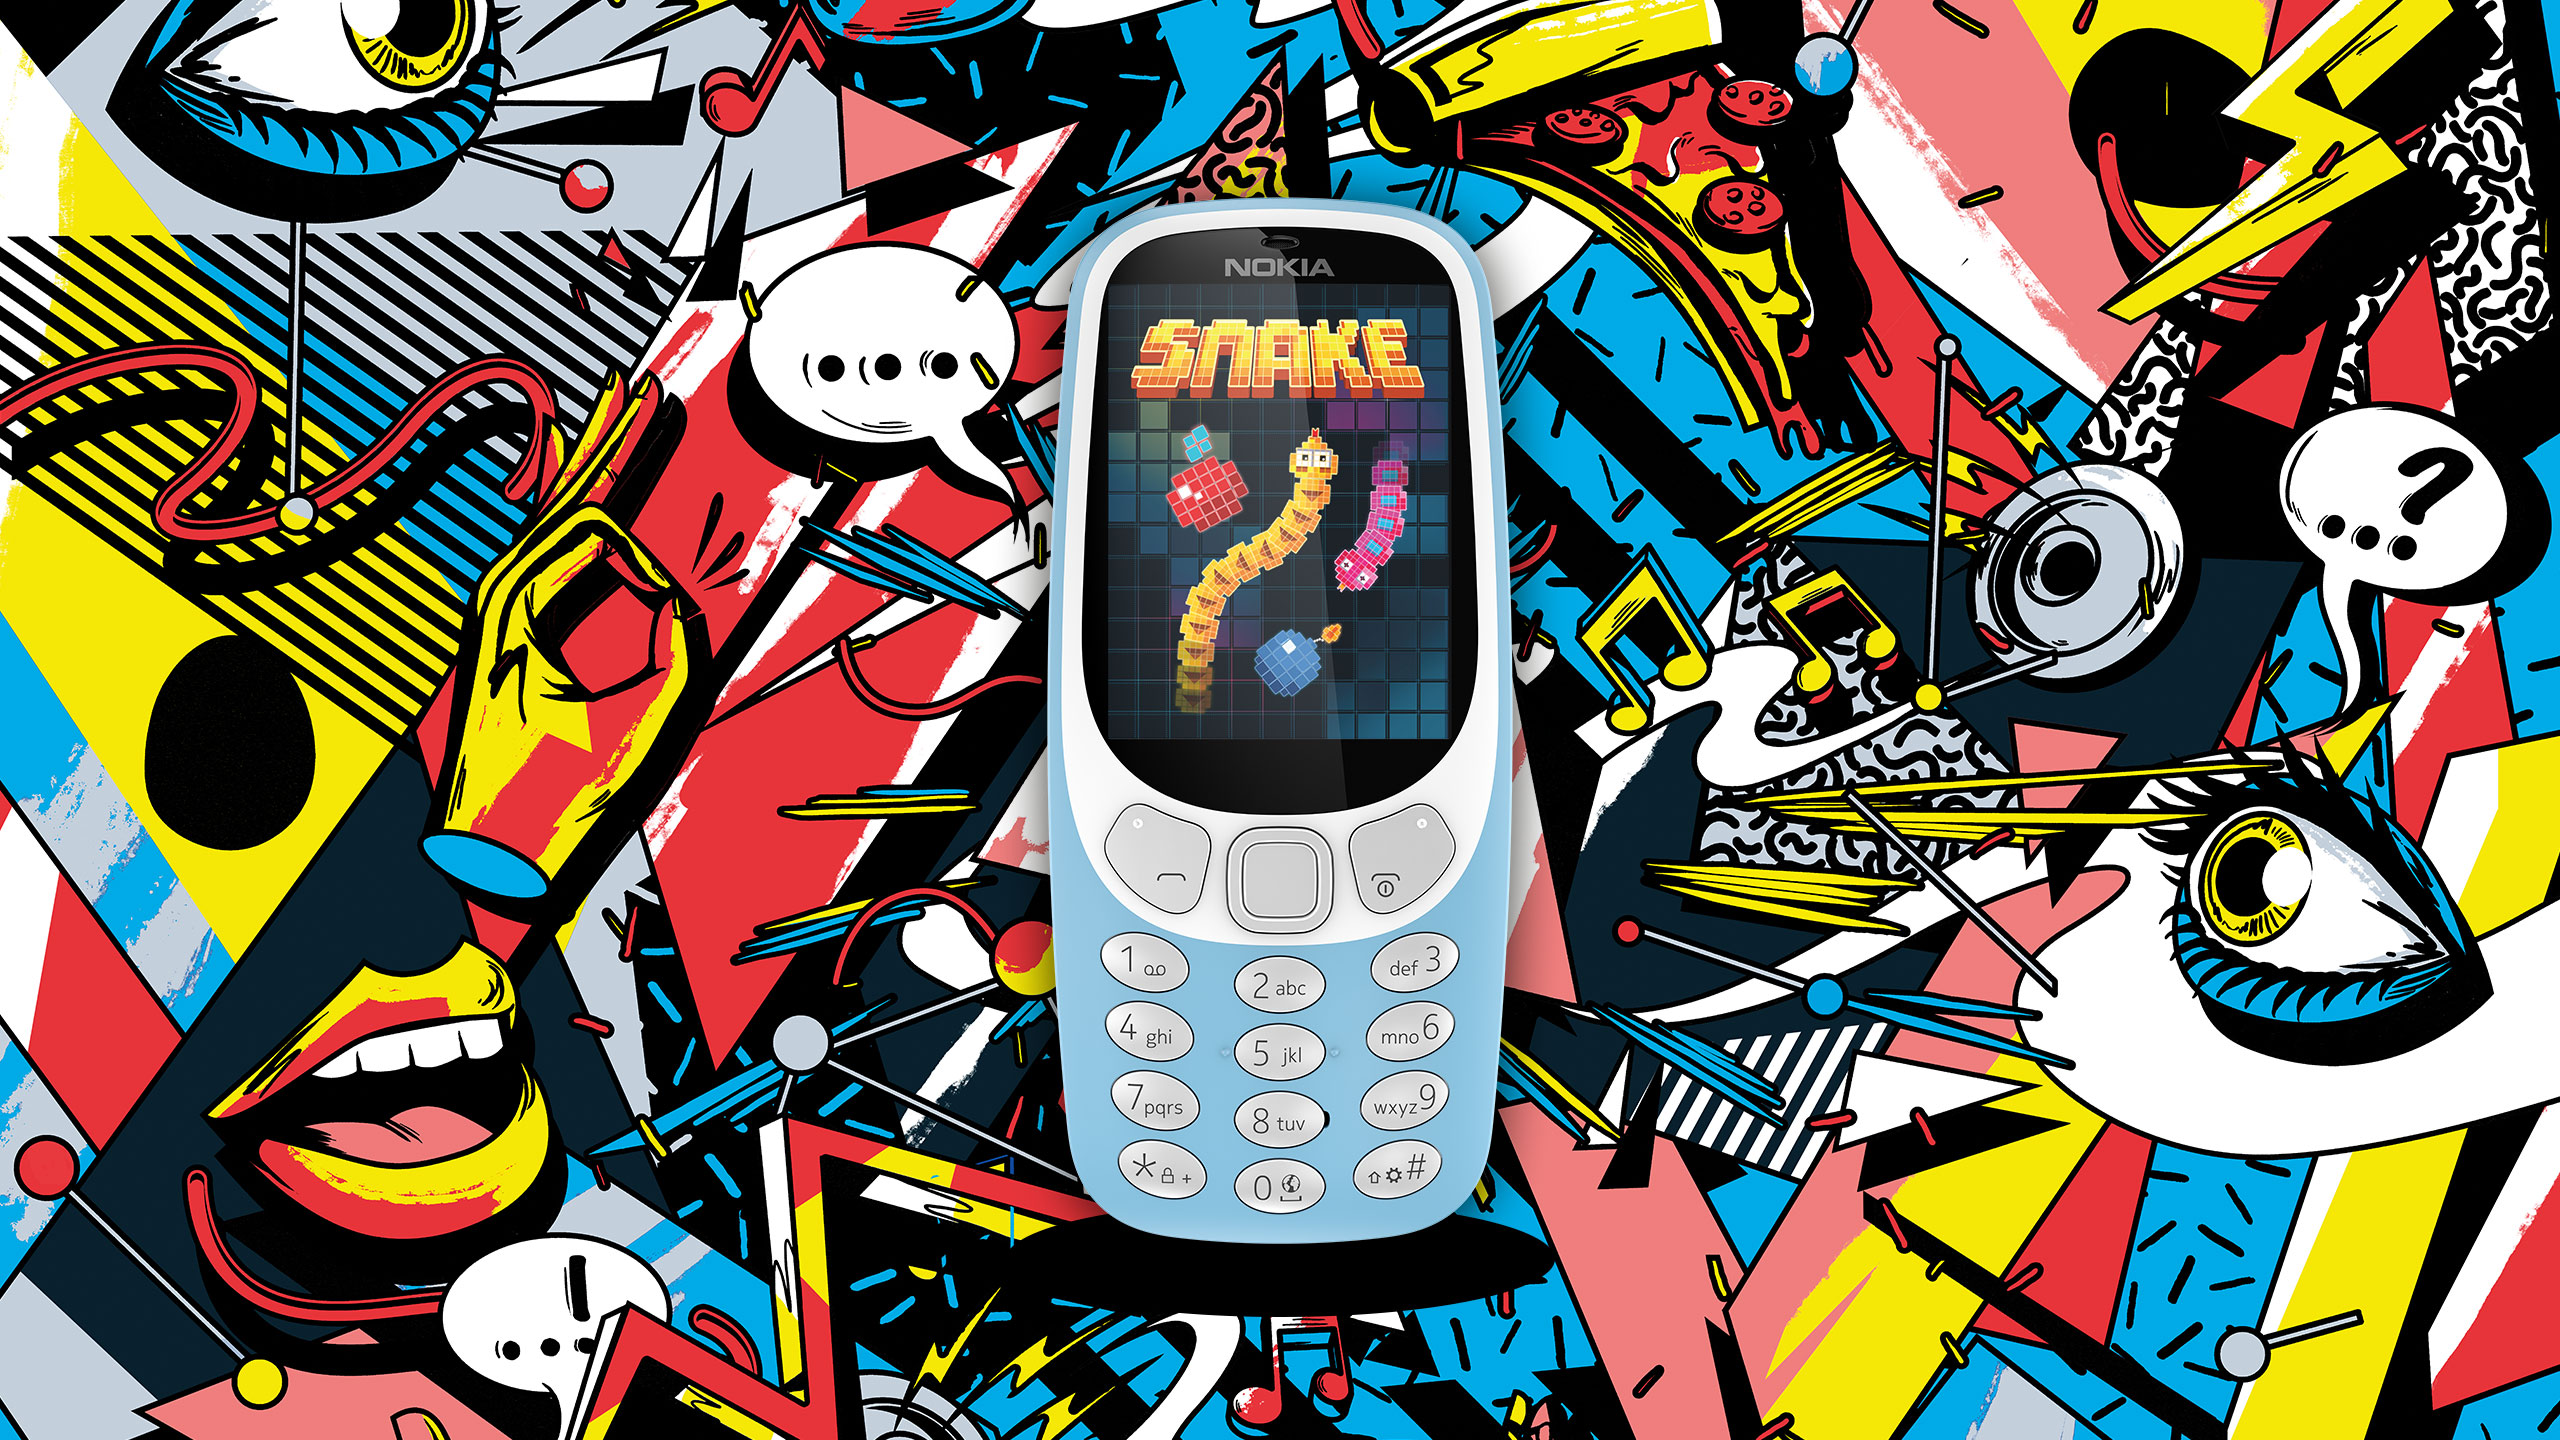 Nokia 3310 3G with popular Snake